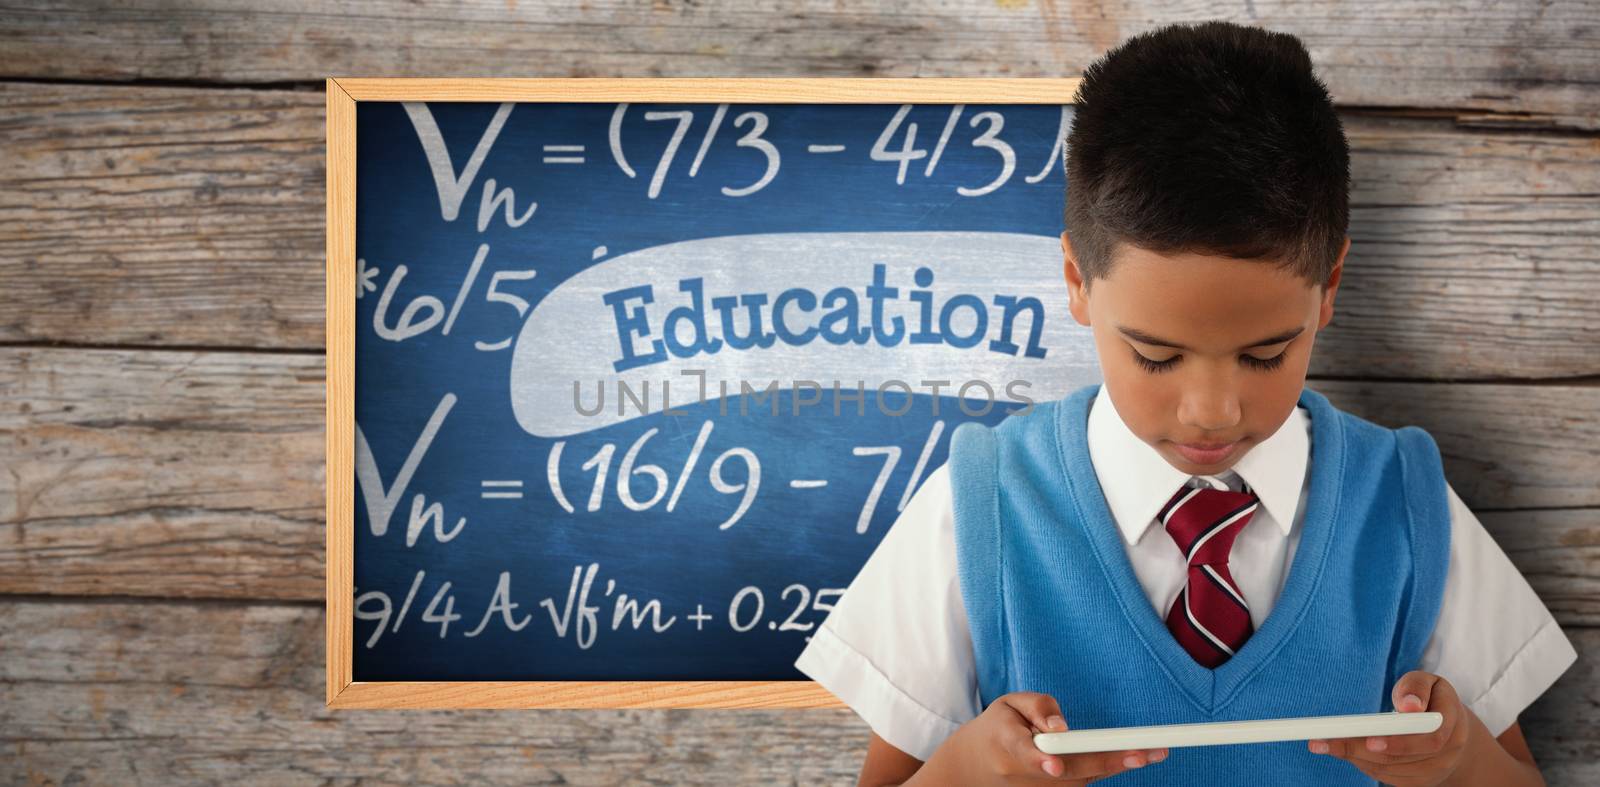 Schoolboy using digital tablet against education against blue chalkboard